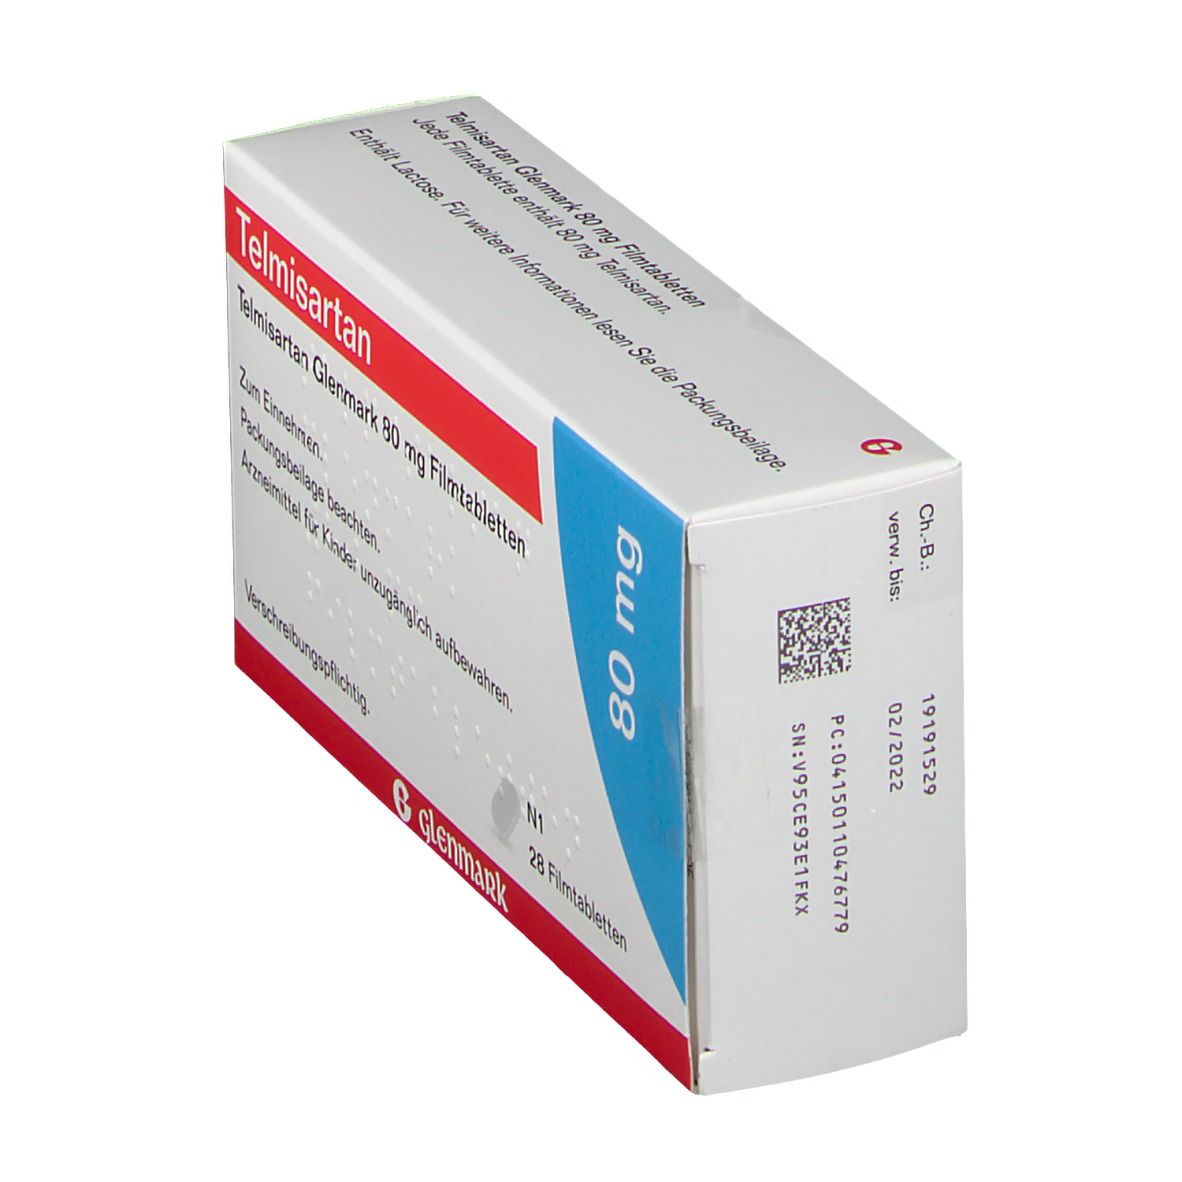 Telmisartan Glenmark 80 mg